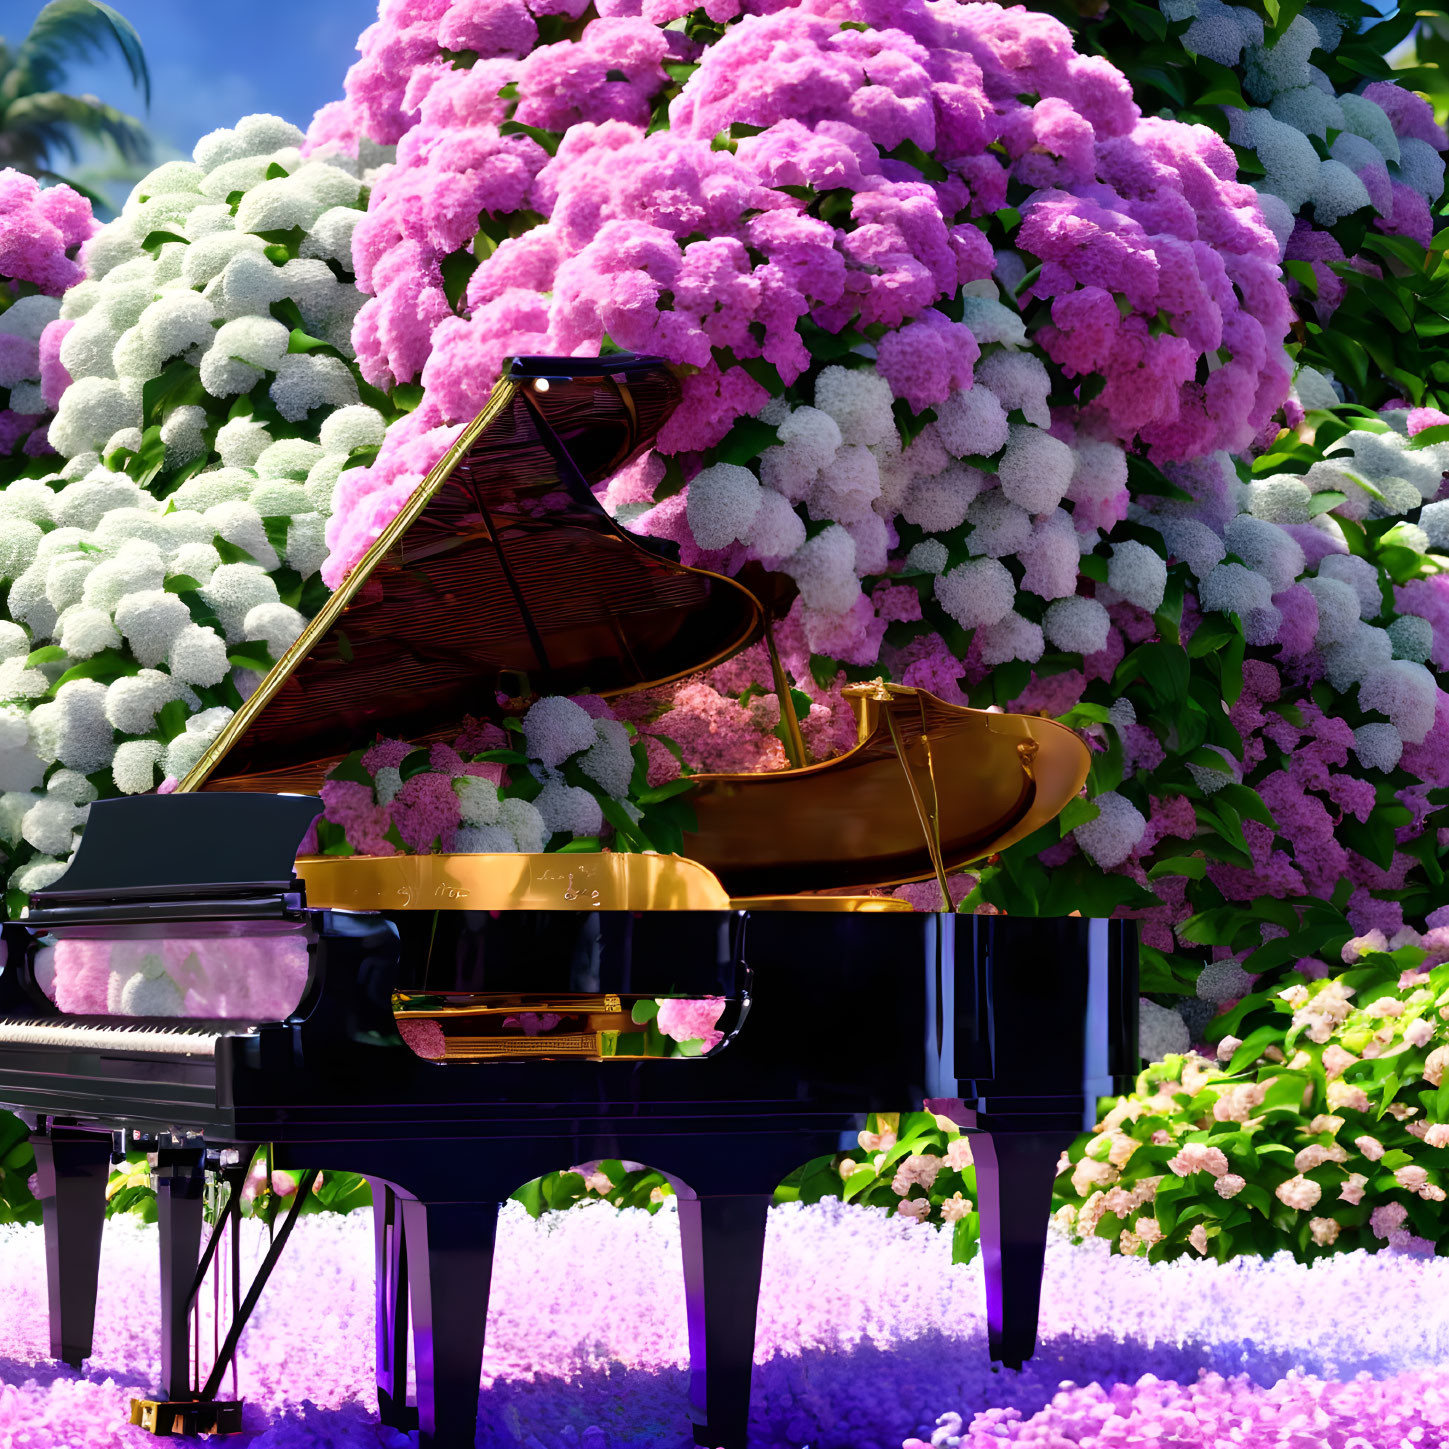 Piano among Hydrangeas